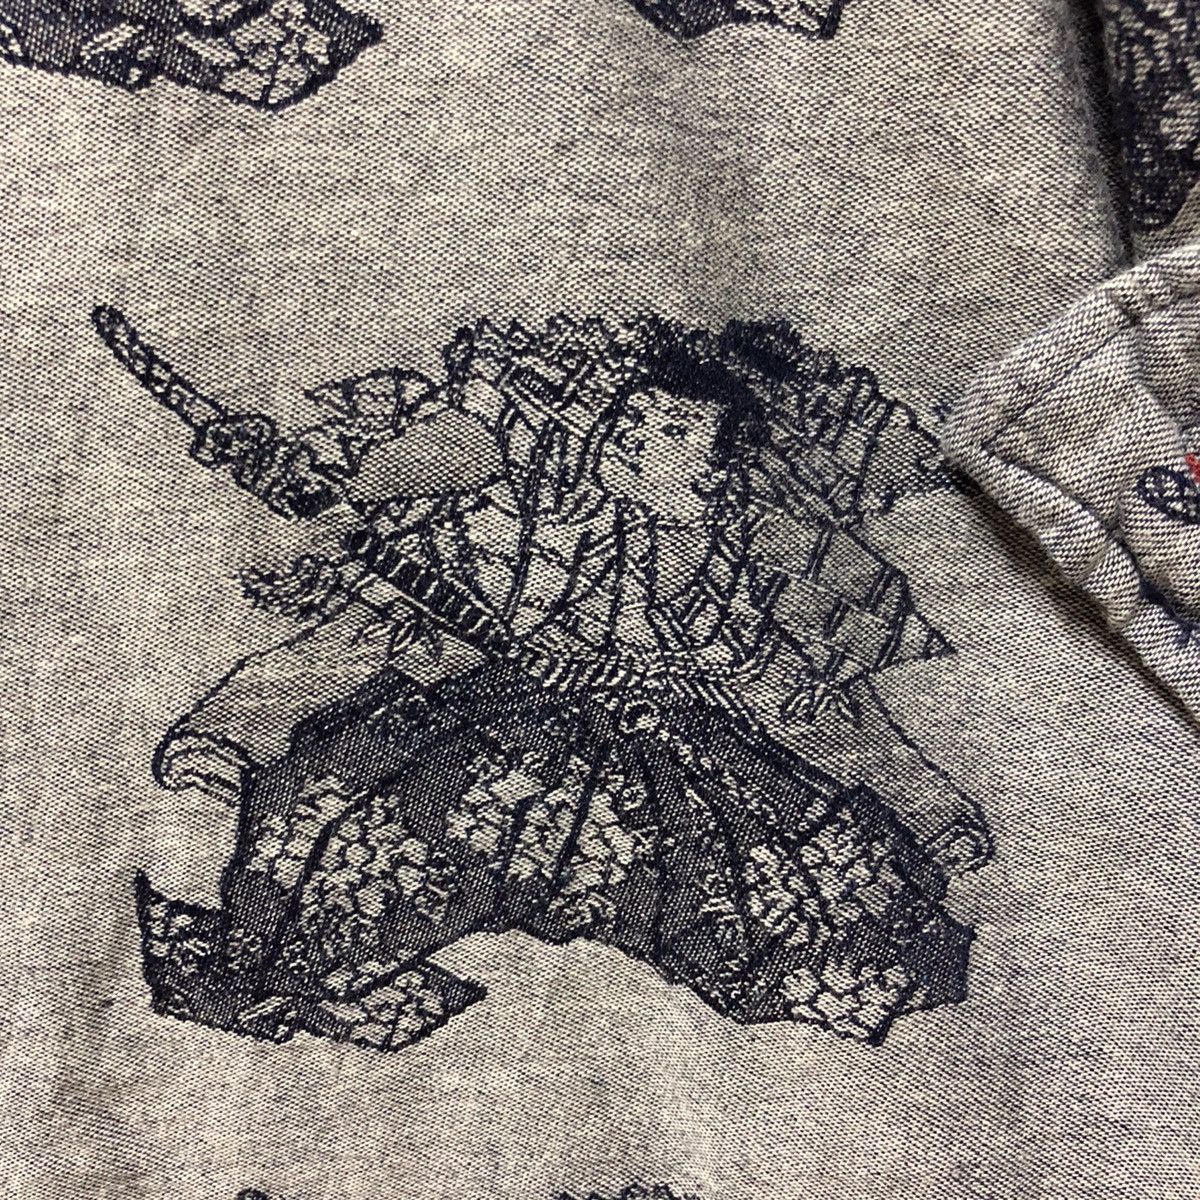 Very Rare - Eternal ronin japan samurai fullprinted denim shirt - 5